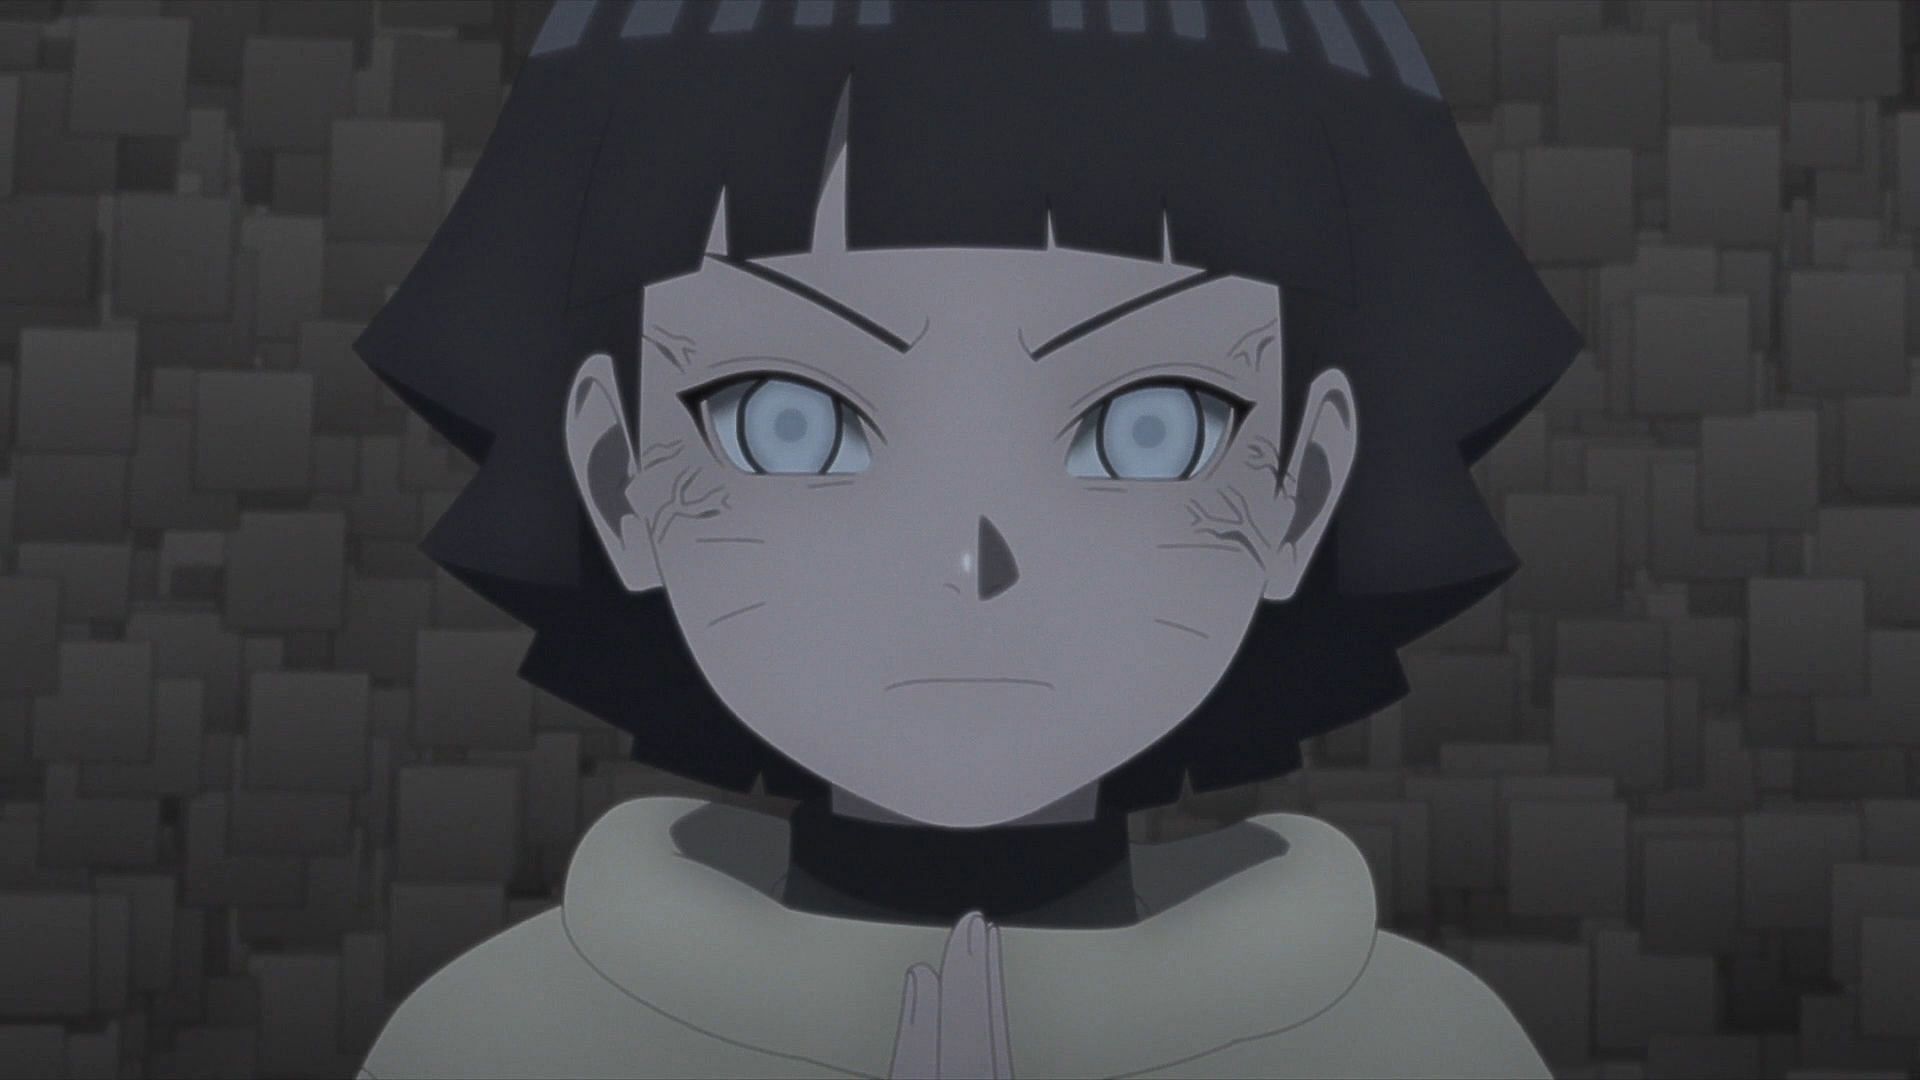 Himawari as seen in the anime series (Image via Studio Pierrot)